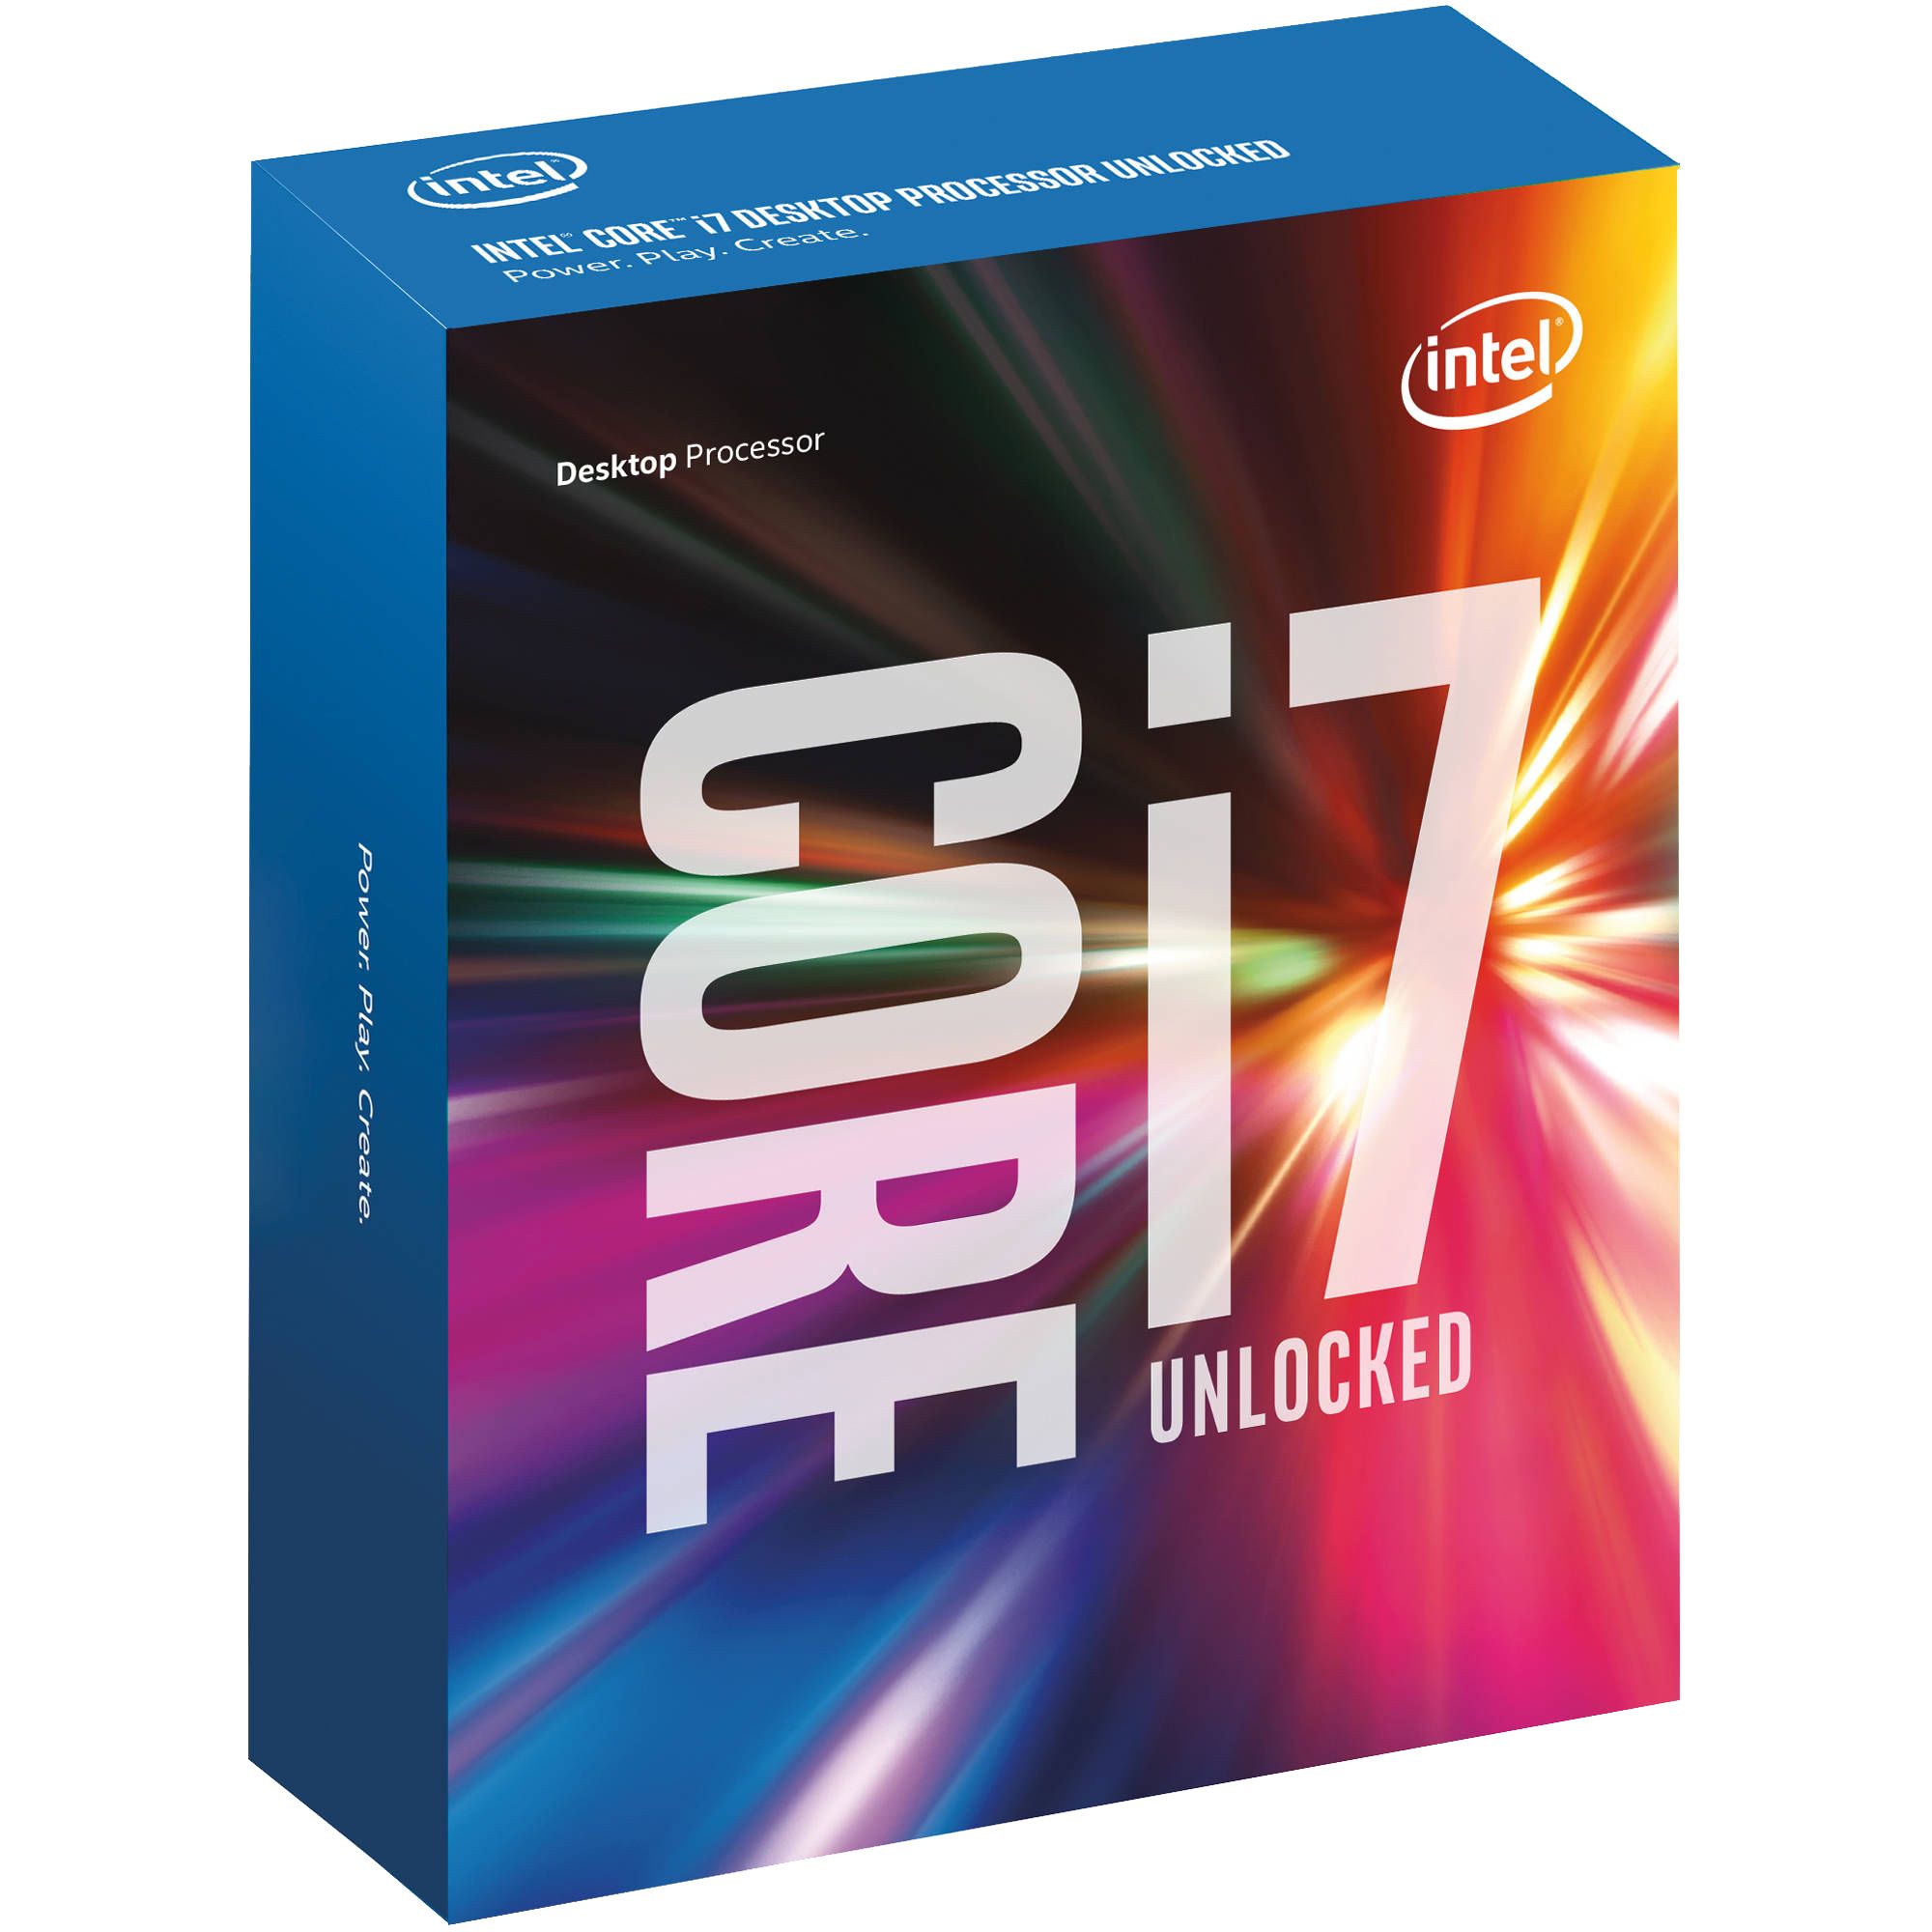 Procesor Intel Core i7-6800K title=Procesor Intel Core i7-6800K